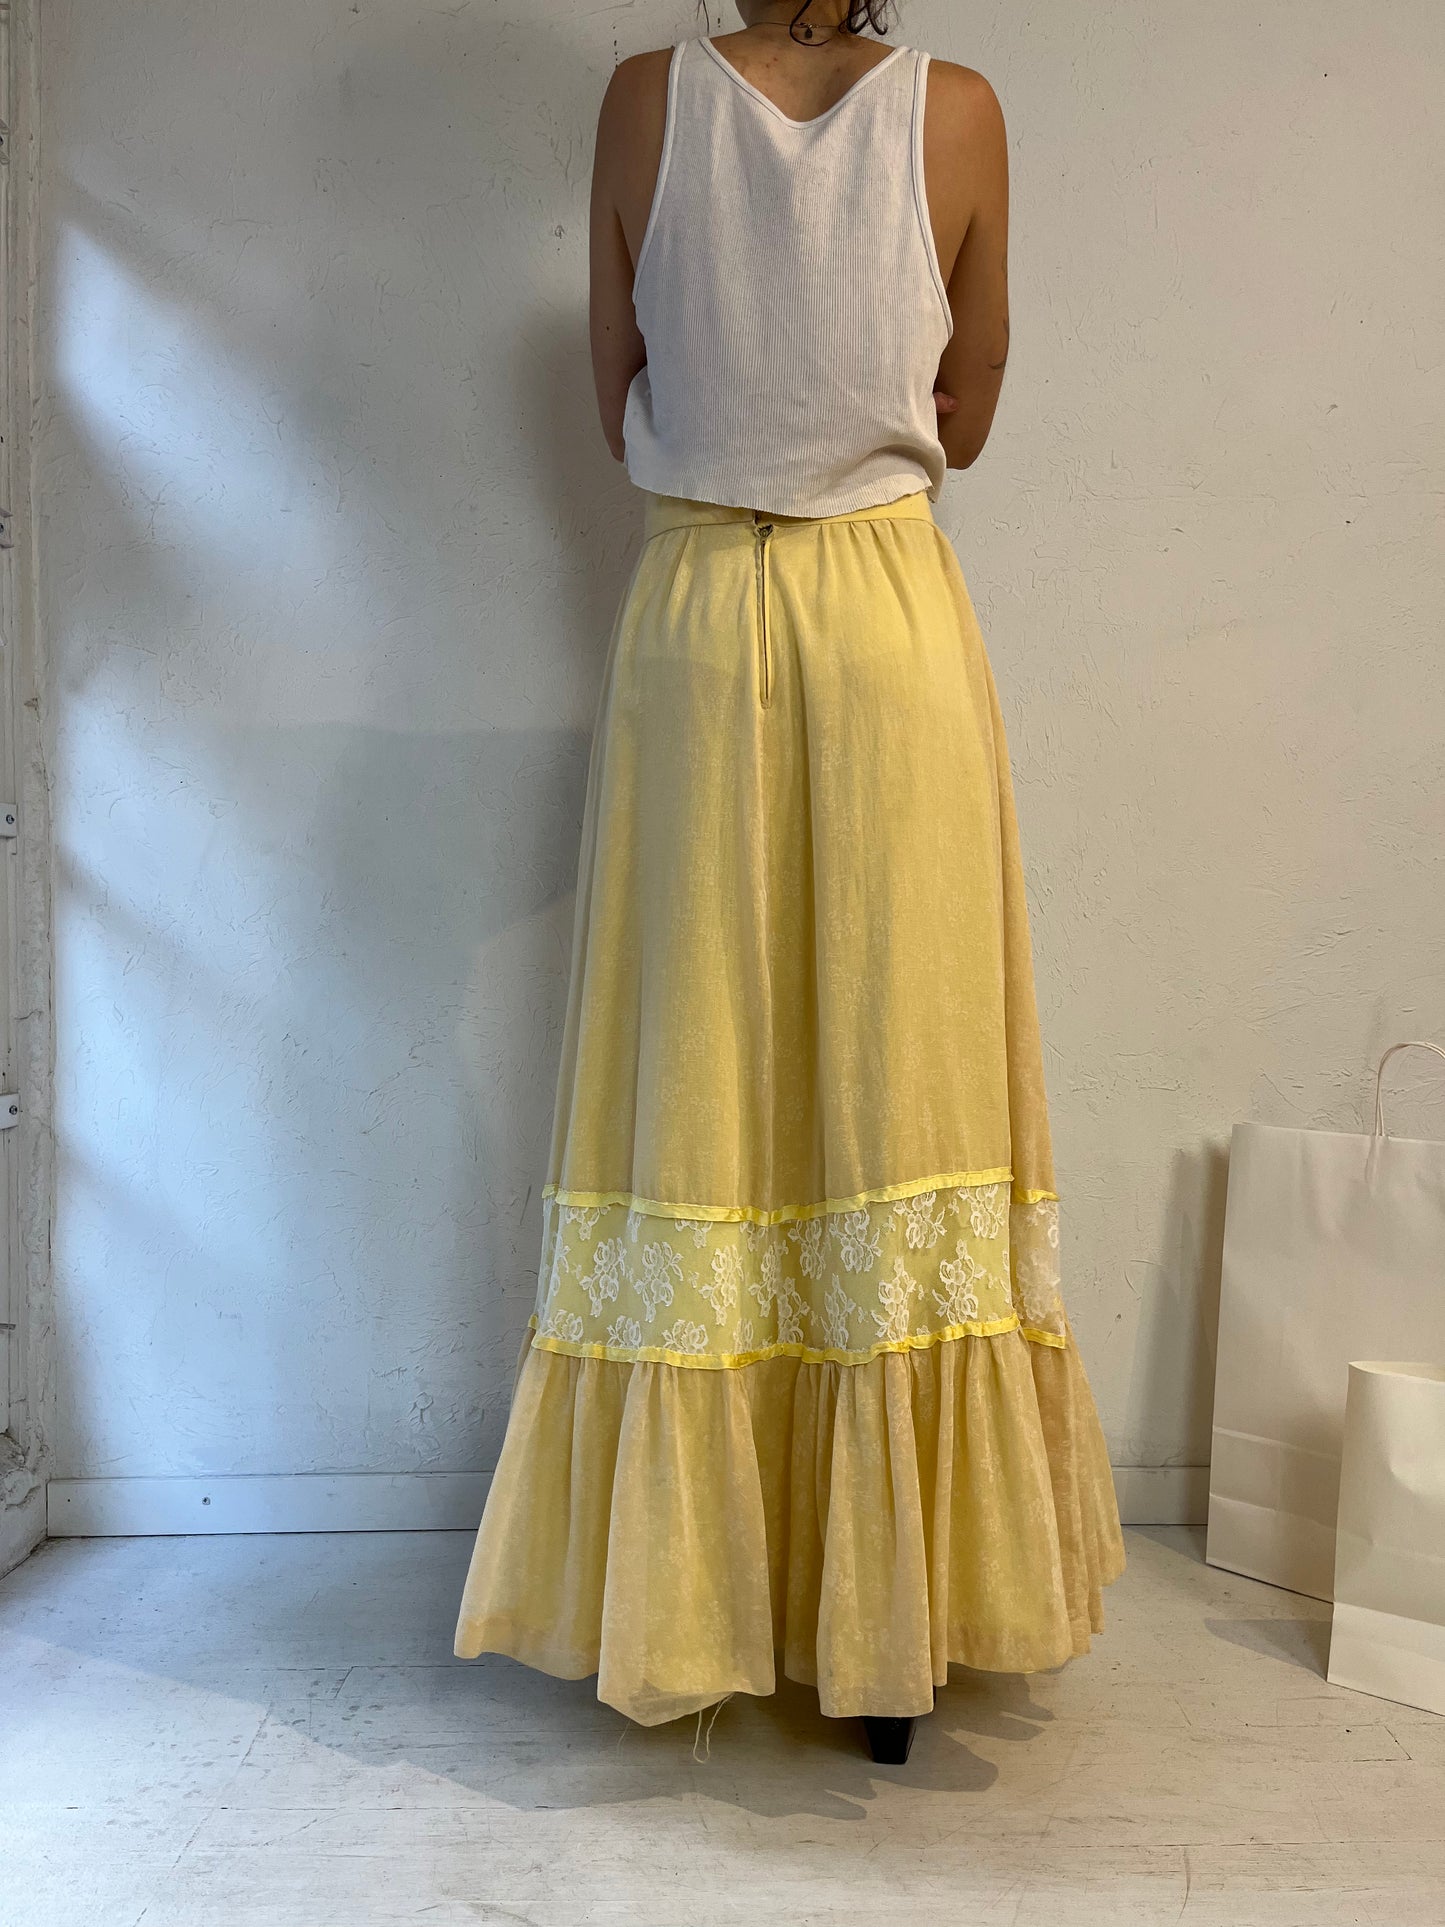 Vintage Handmade Pale Yellow Peasant Skirt / Medium